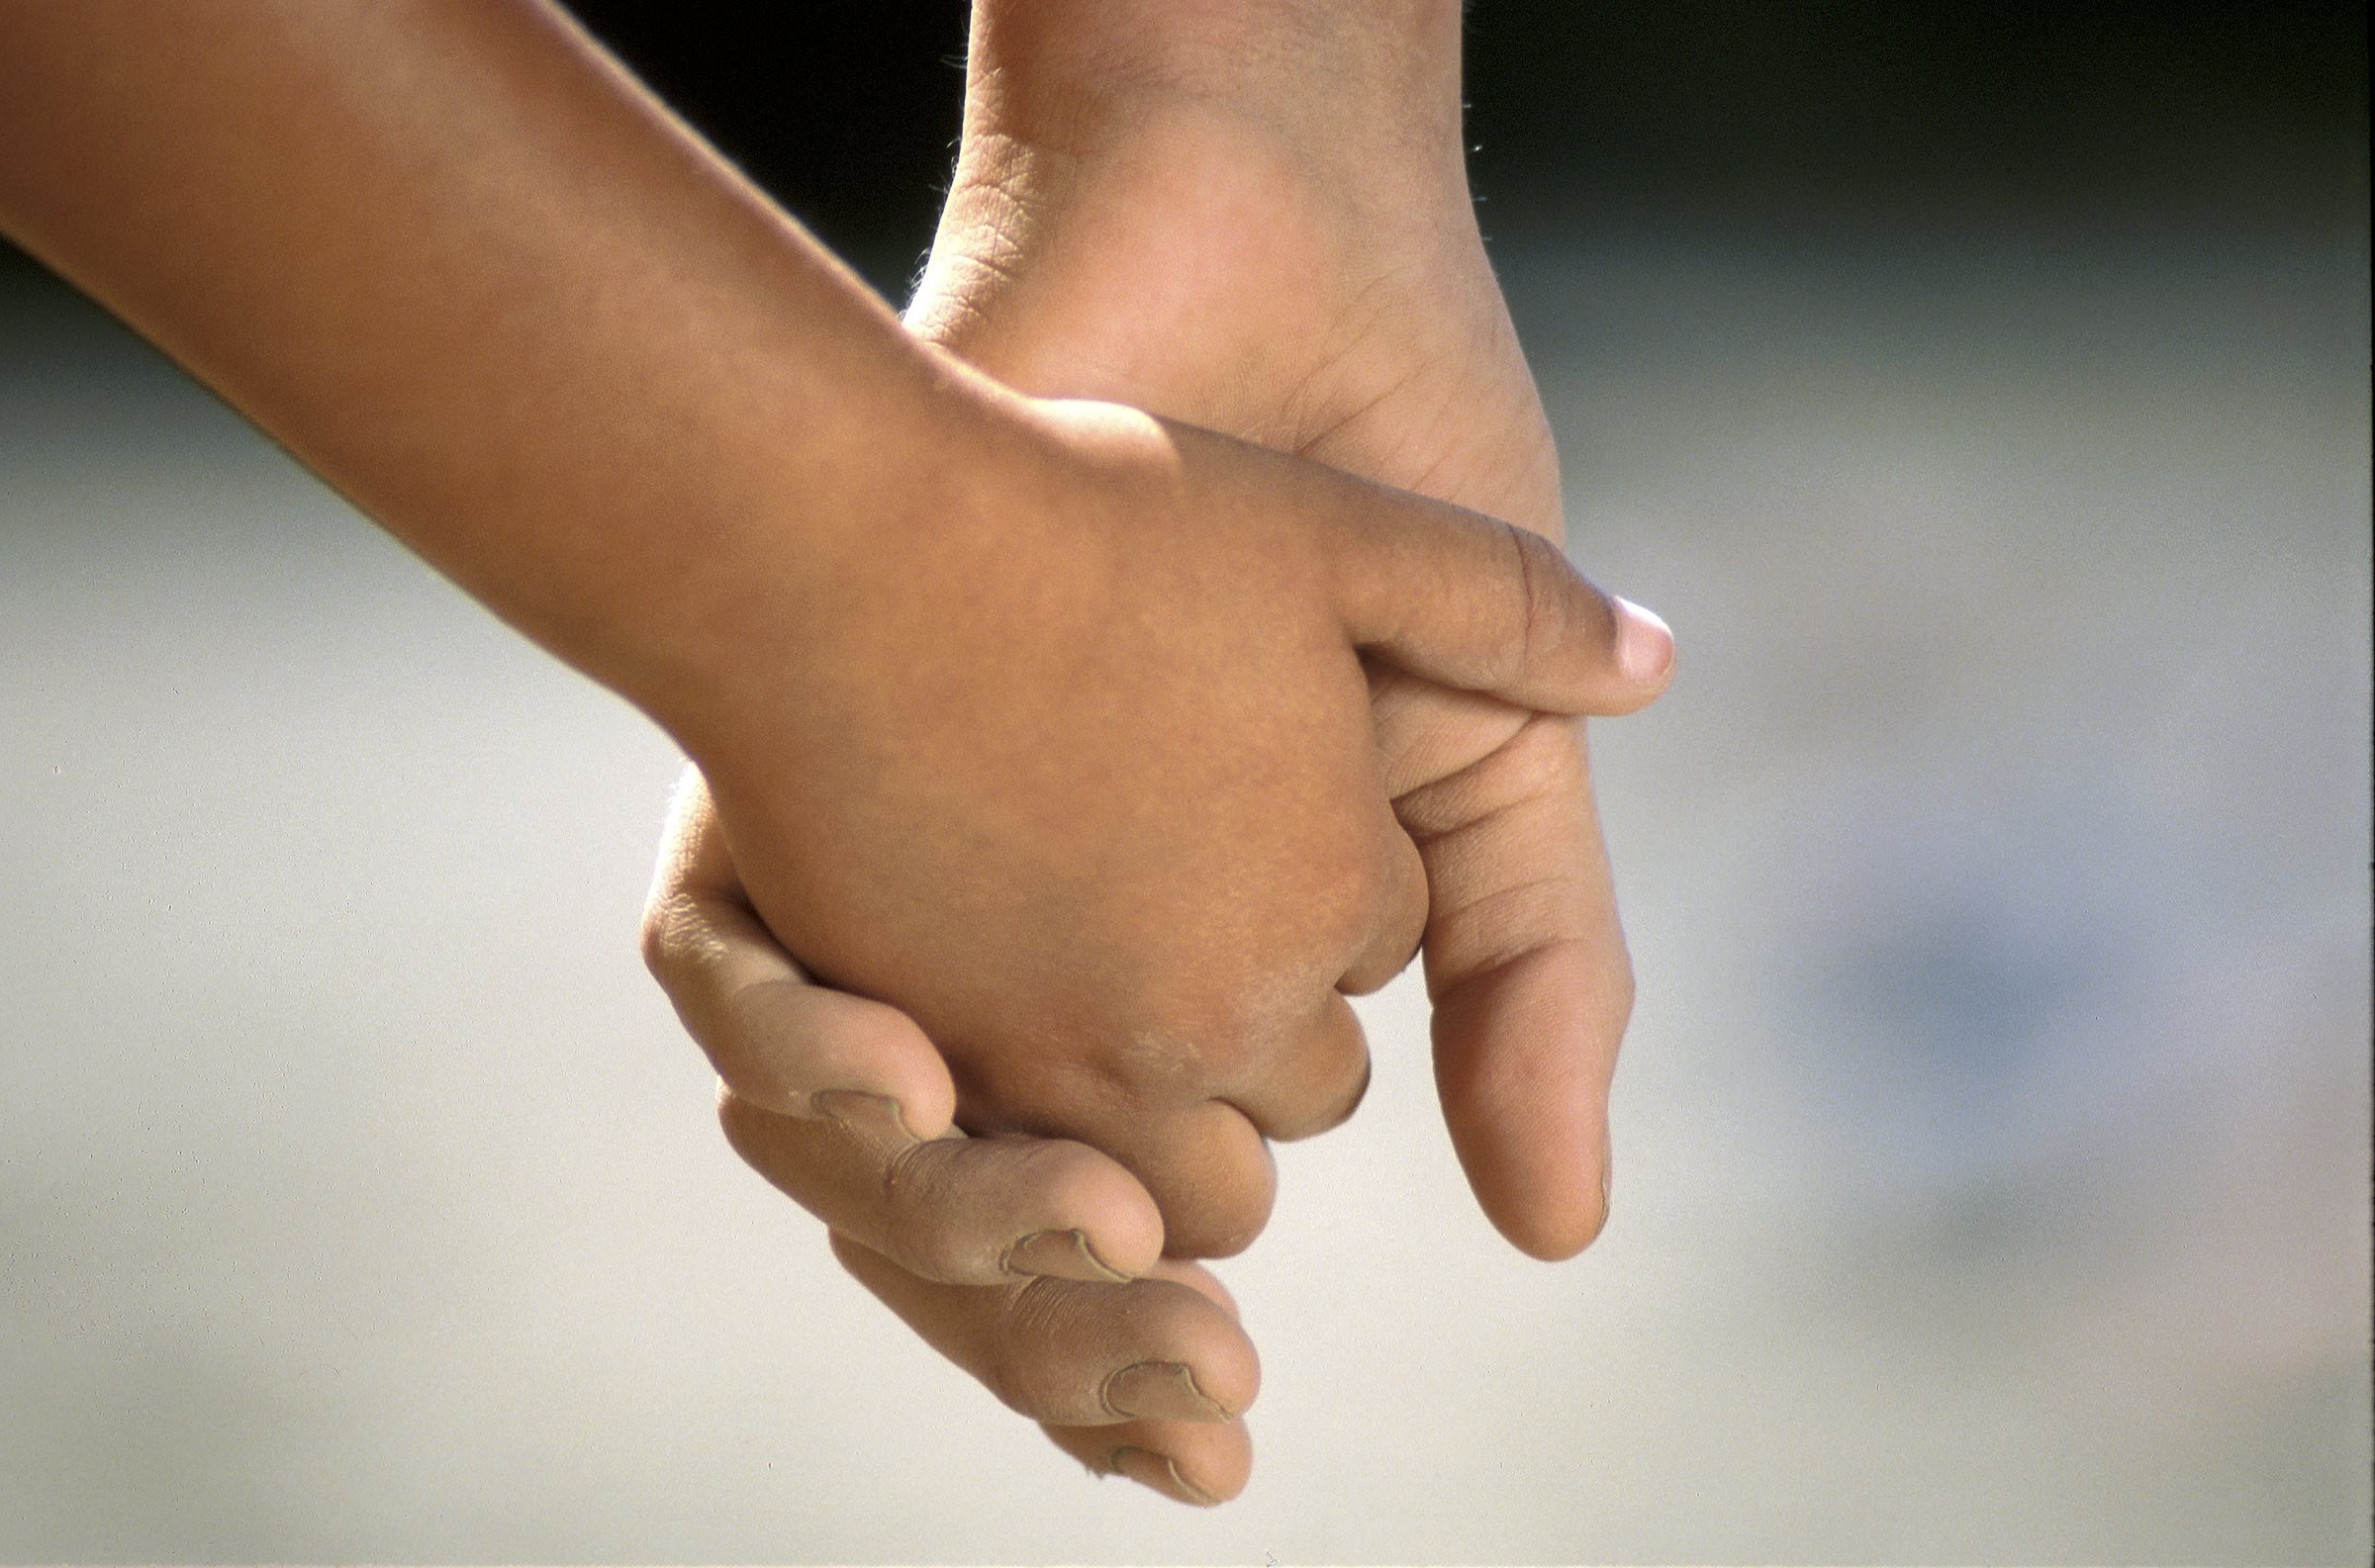 Children’s social care image of two children holding hands